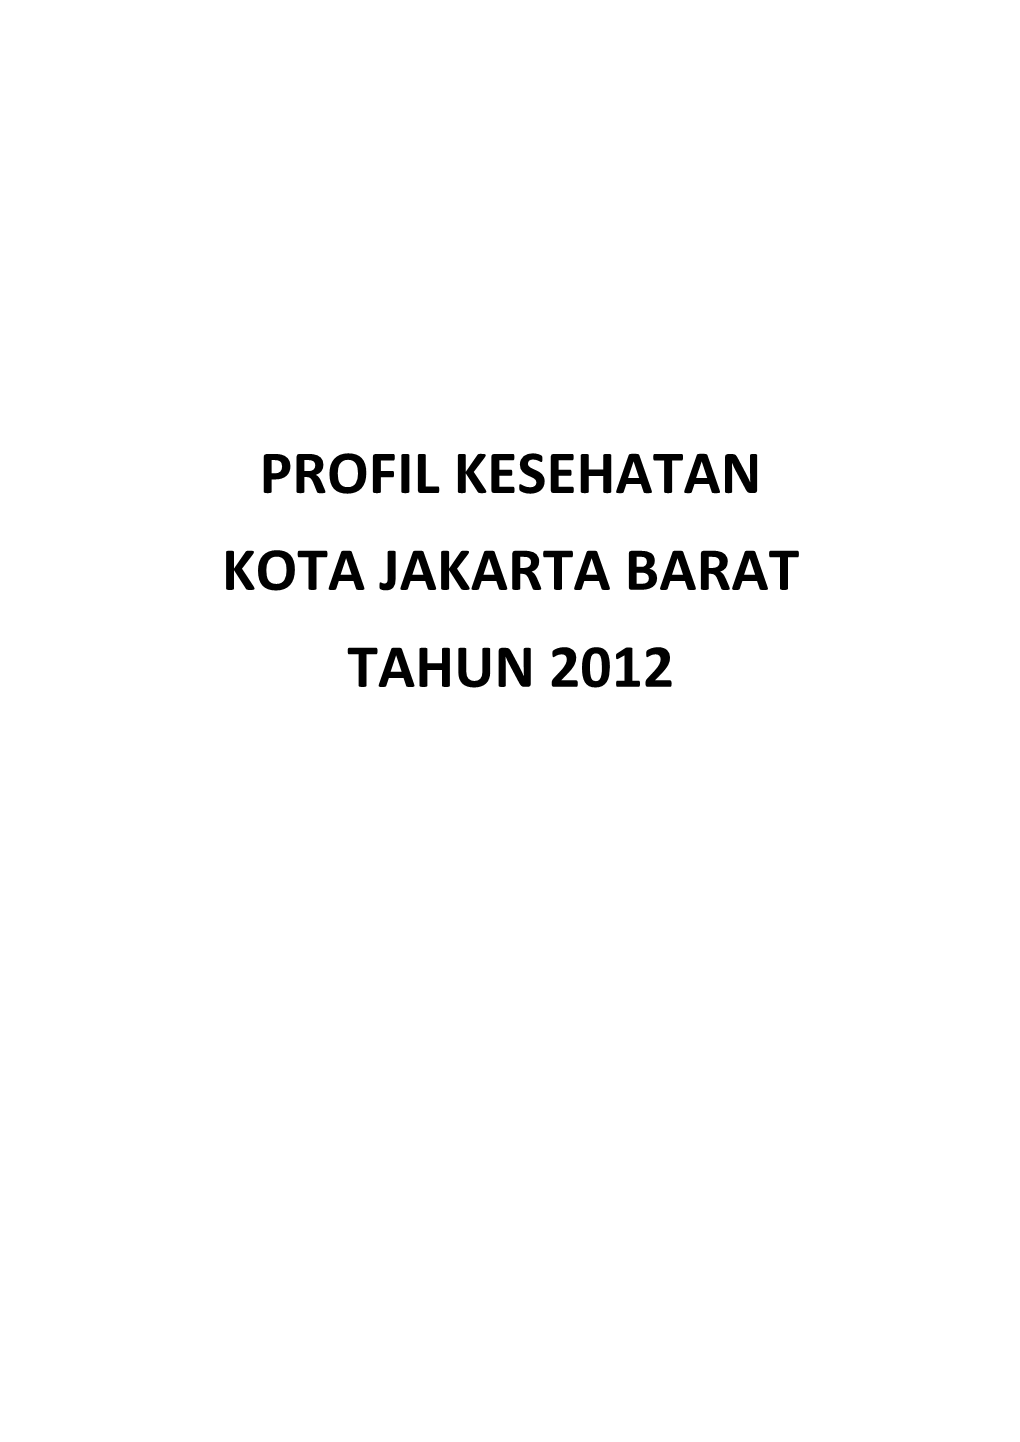 Profil Kesehatan Kota Jakarta Barat Tahun 2012